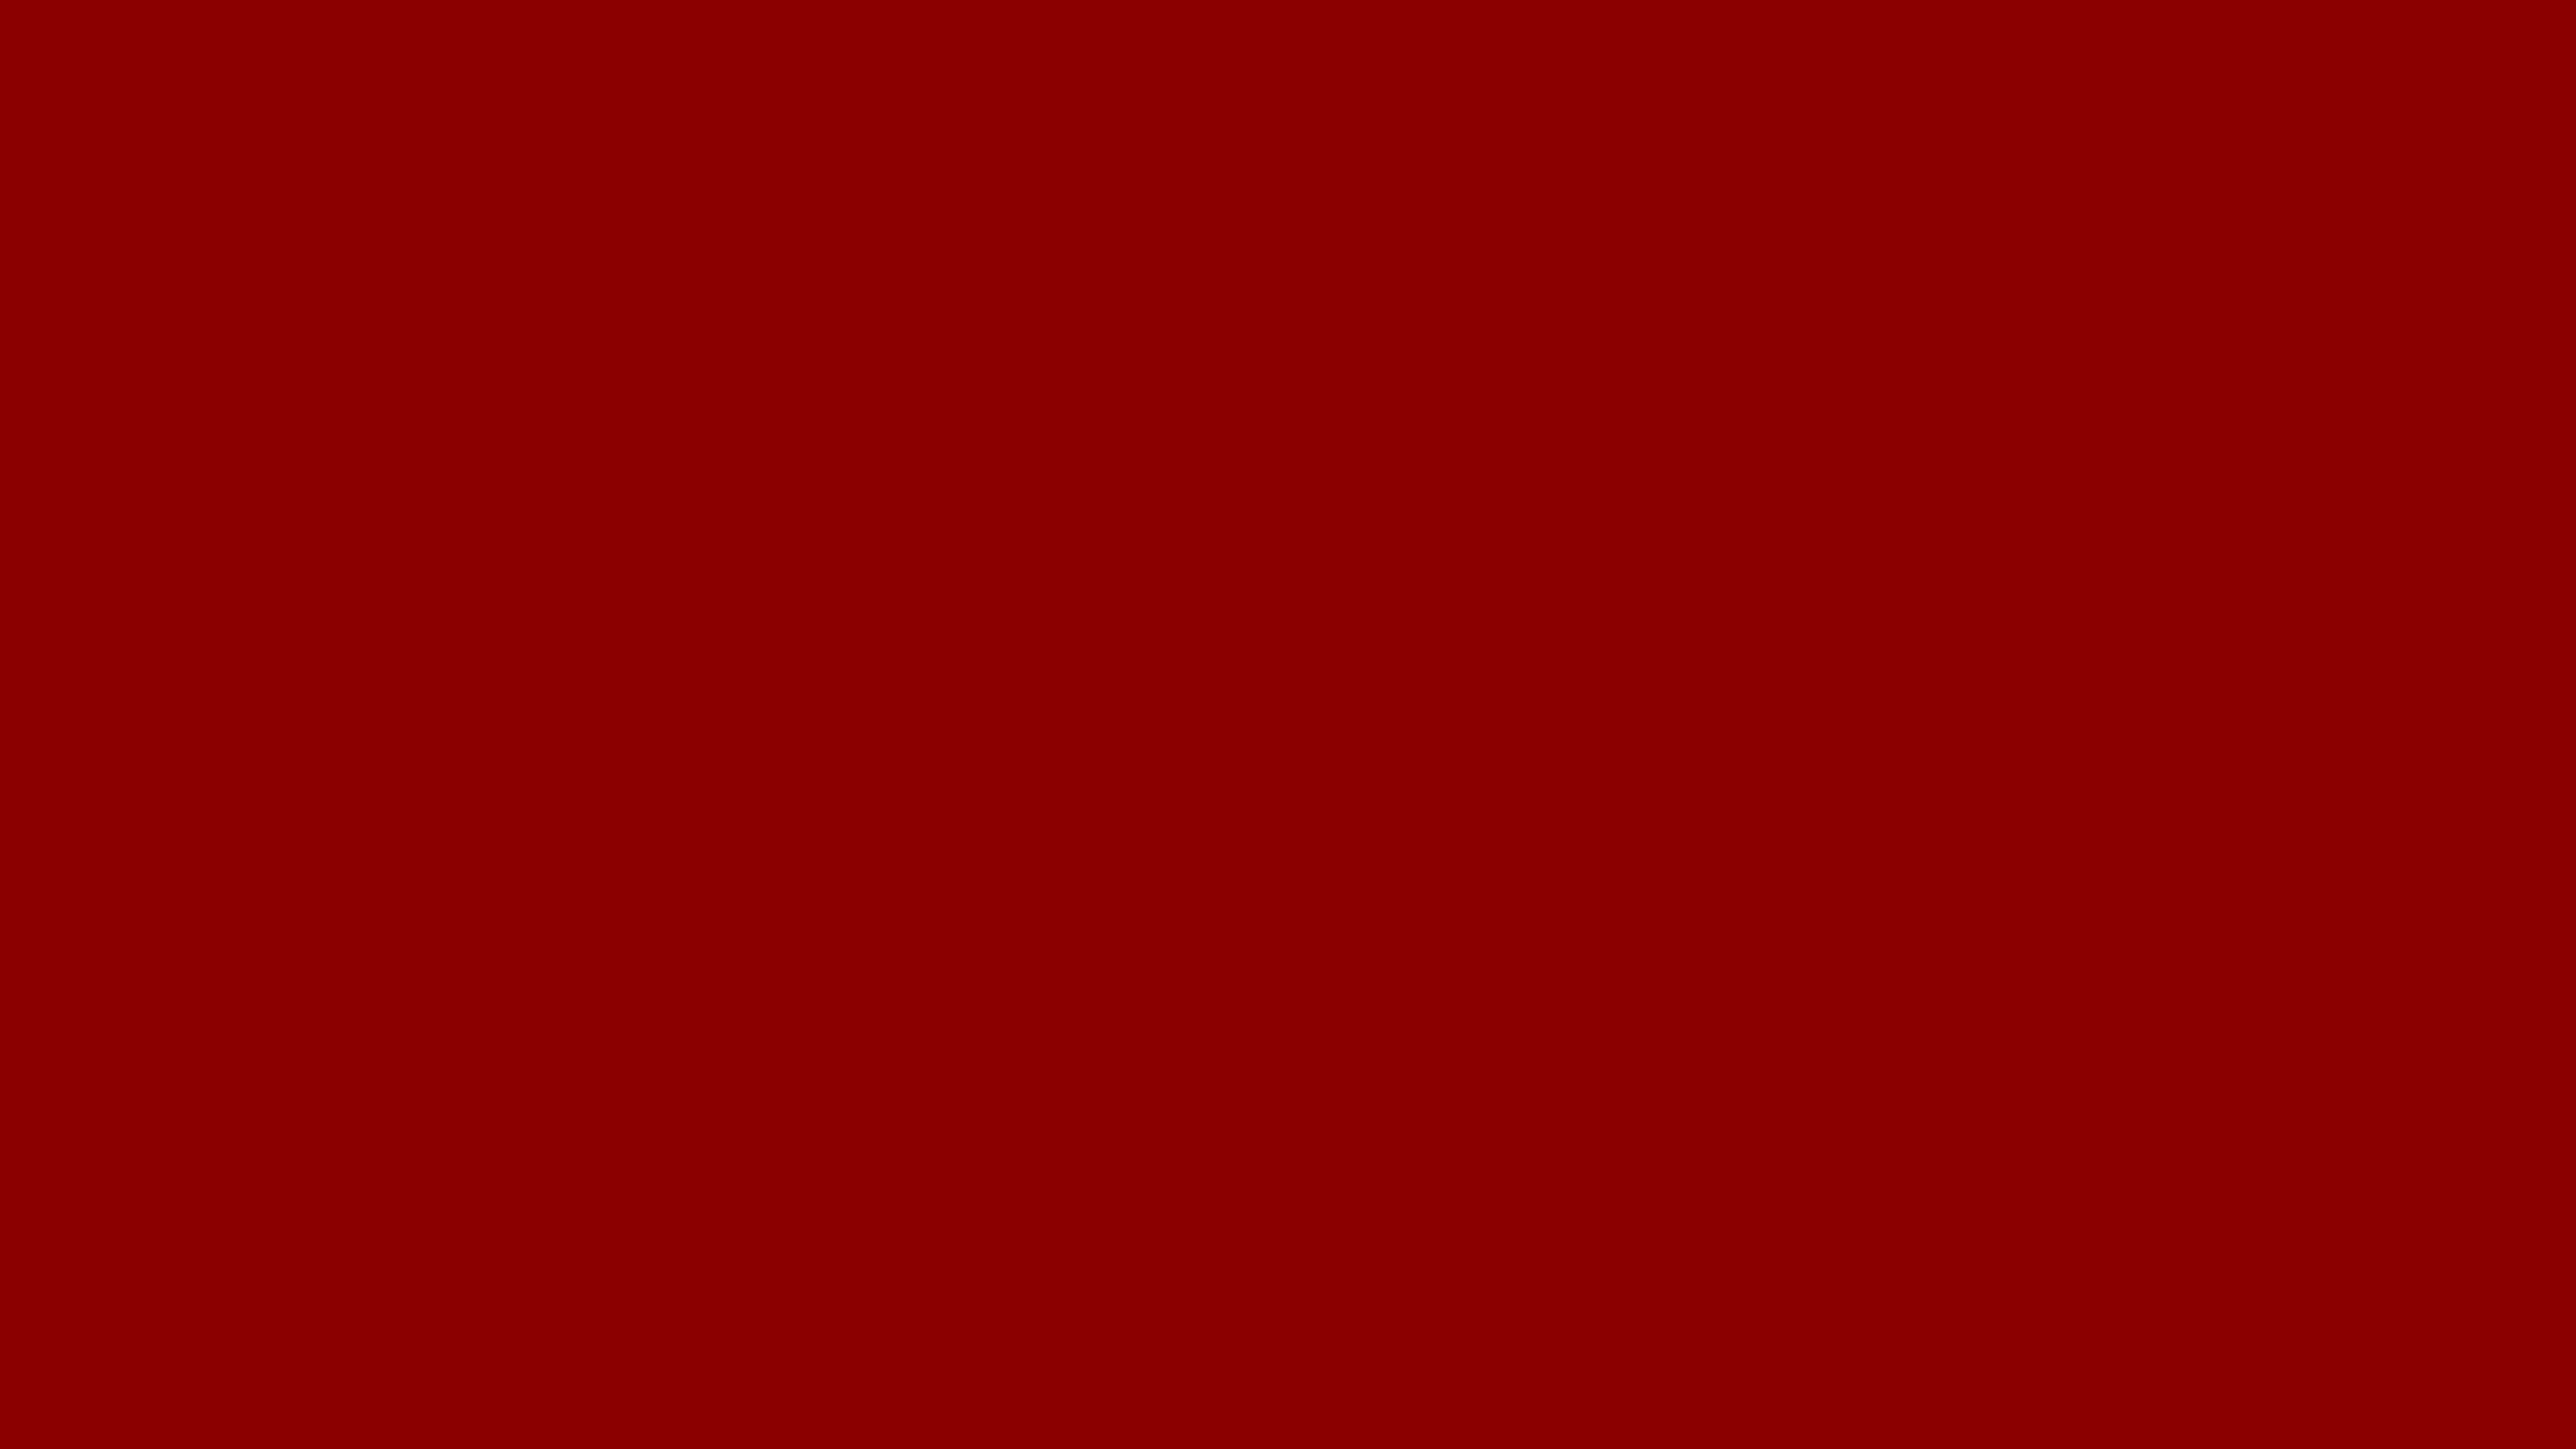 Dark Red Color 8b0000 Information Hsl Rgb Pantone